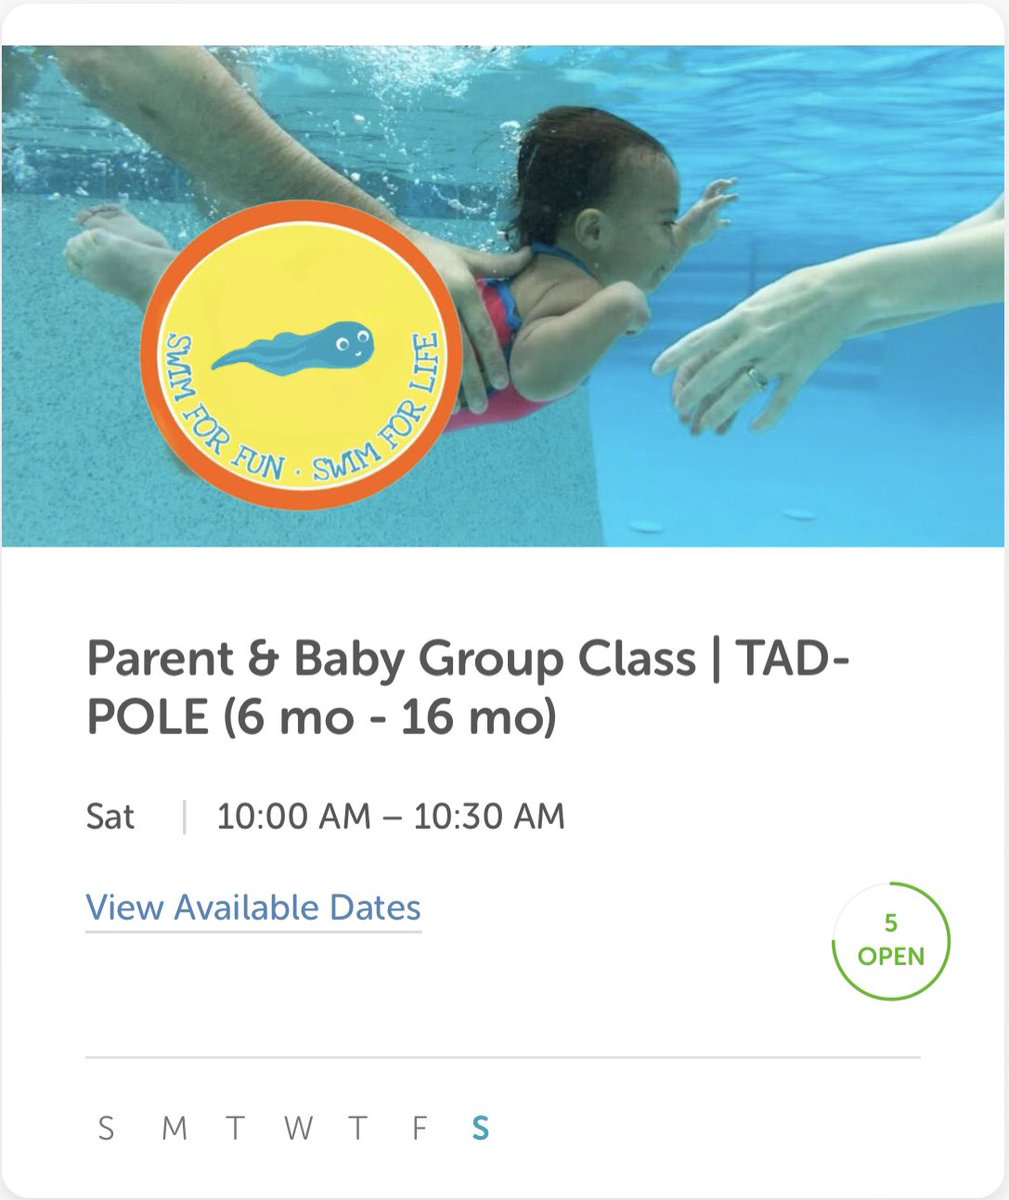 Visit our class portal to enroll!

app.iclasspro.com/portal/solaris…

TADPOLE (6mo - 16mo) 
10:00am
GUPPY (16mo - 28mo)
10:30am

#parentbabyclass #learntoswim #watersafety #carrolltonparents #carrolltontx #coppelltx #thecolony